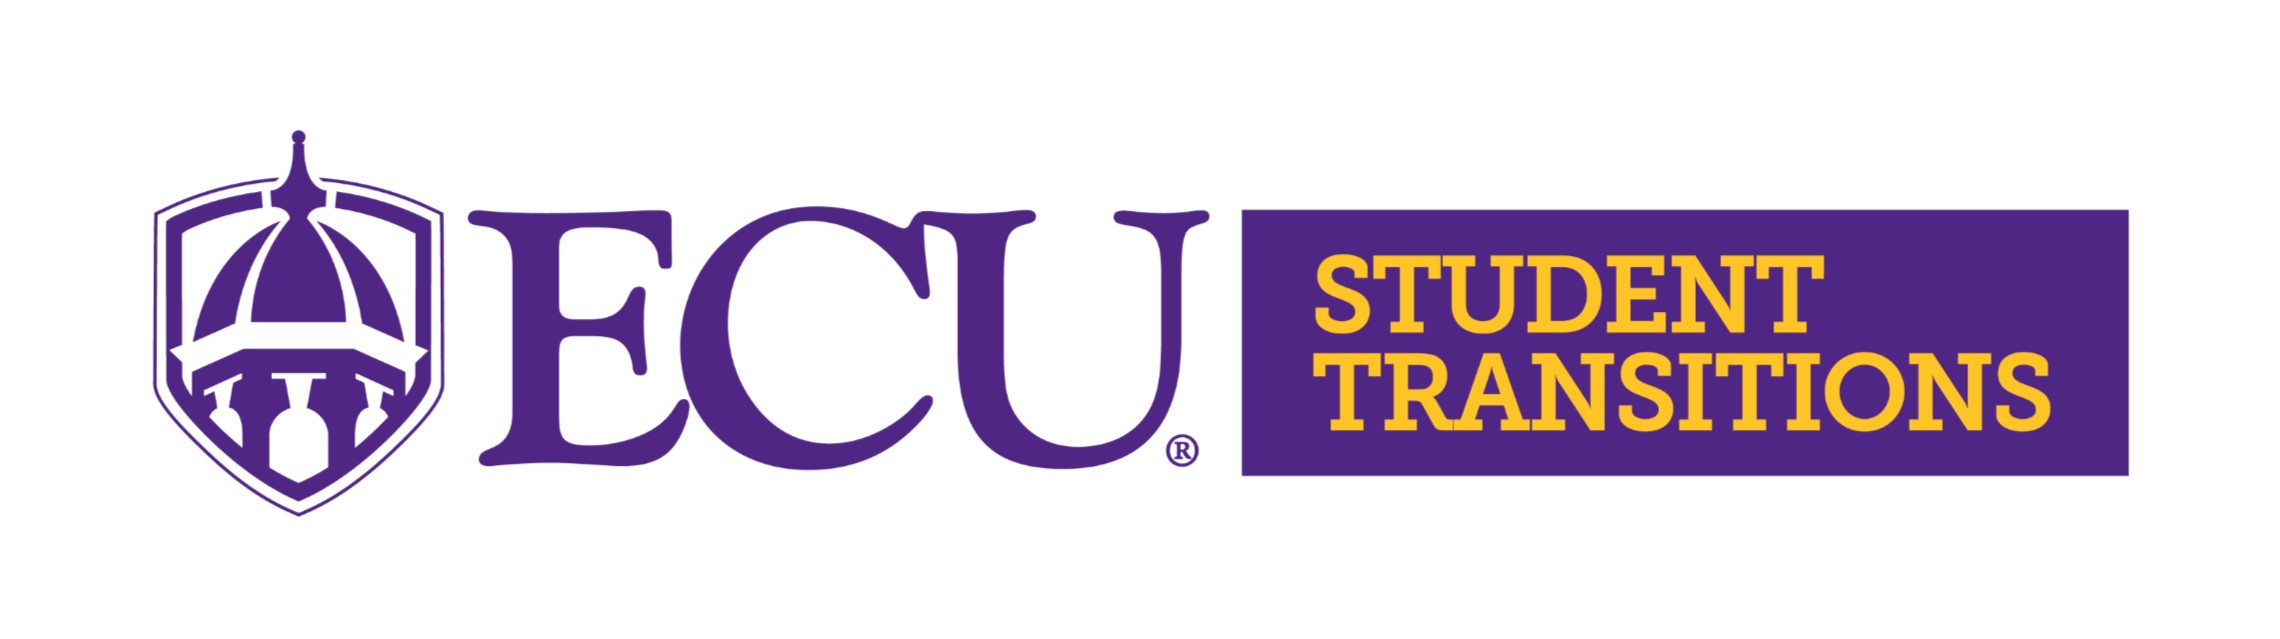 ECU-Student Transitions